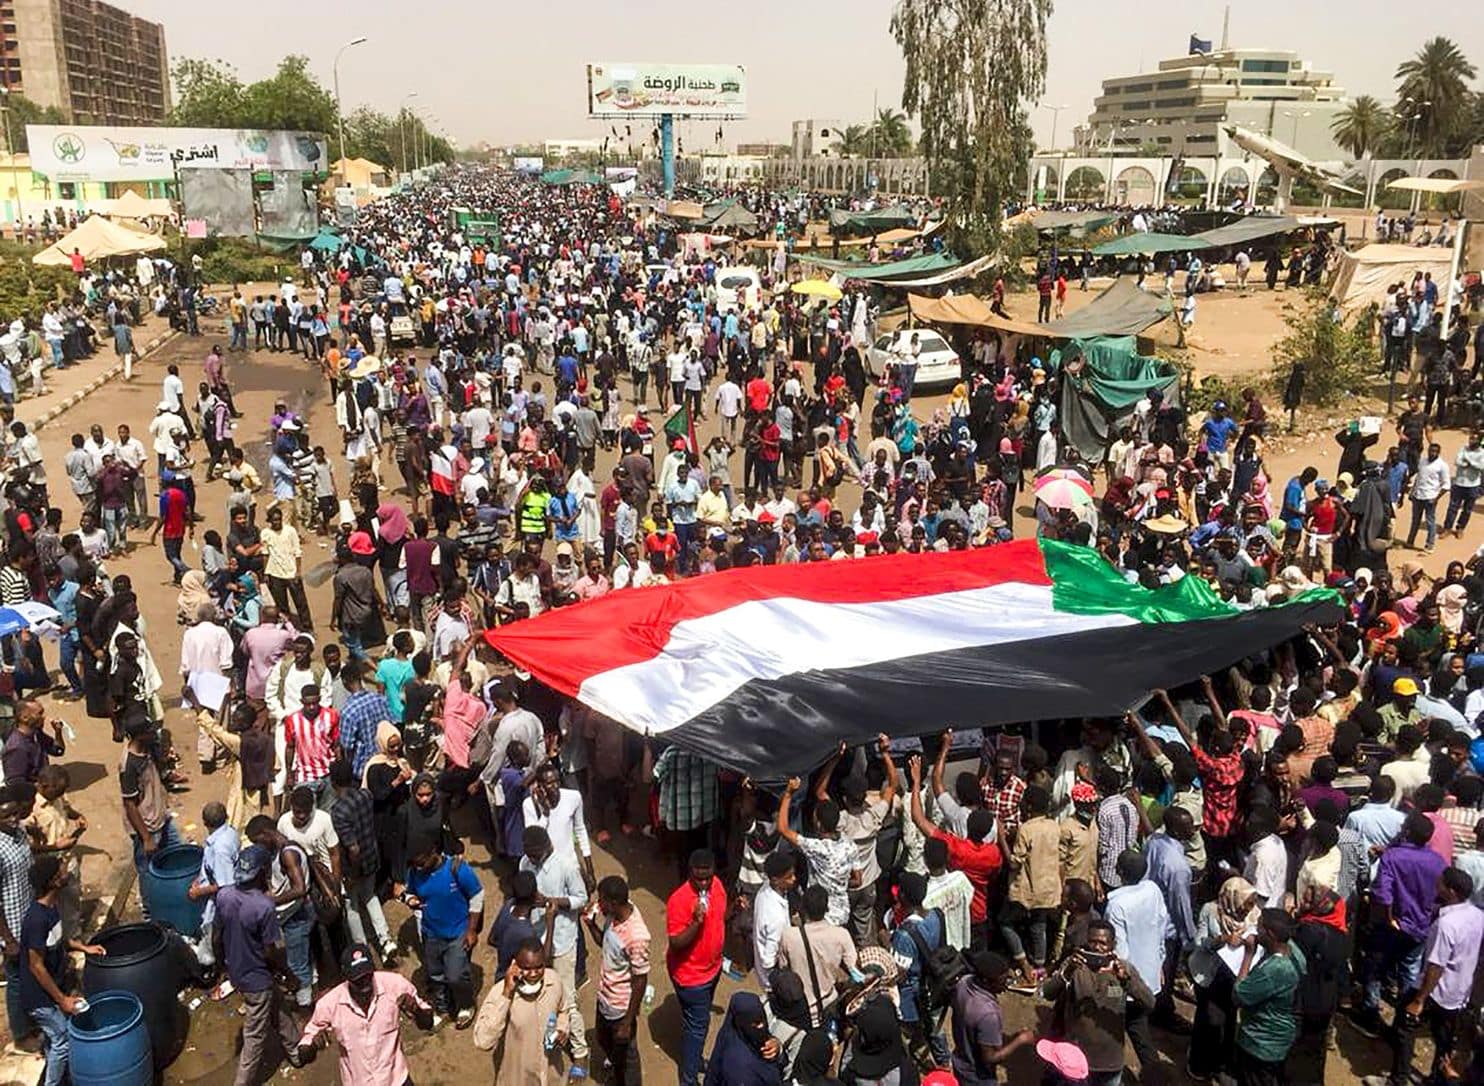 SUDAN: DELAYS TO POLITICAL TRANSITION RISK SLIDE INTO CIVIL WAR